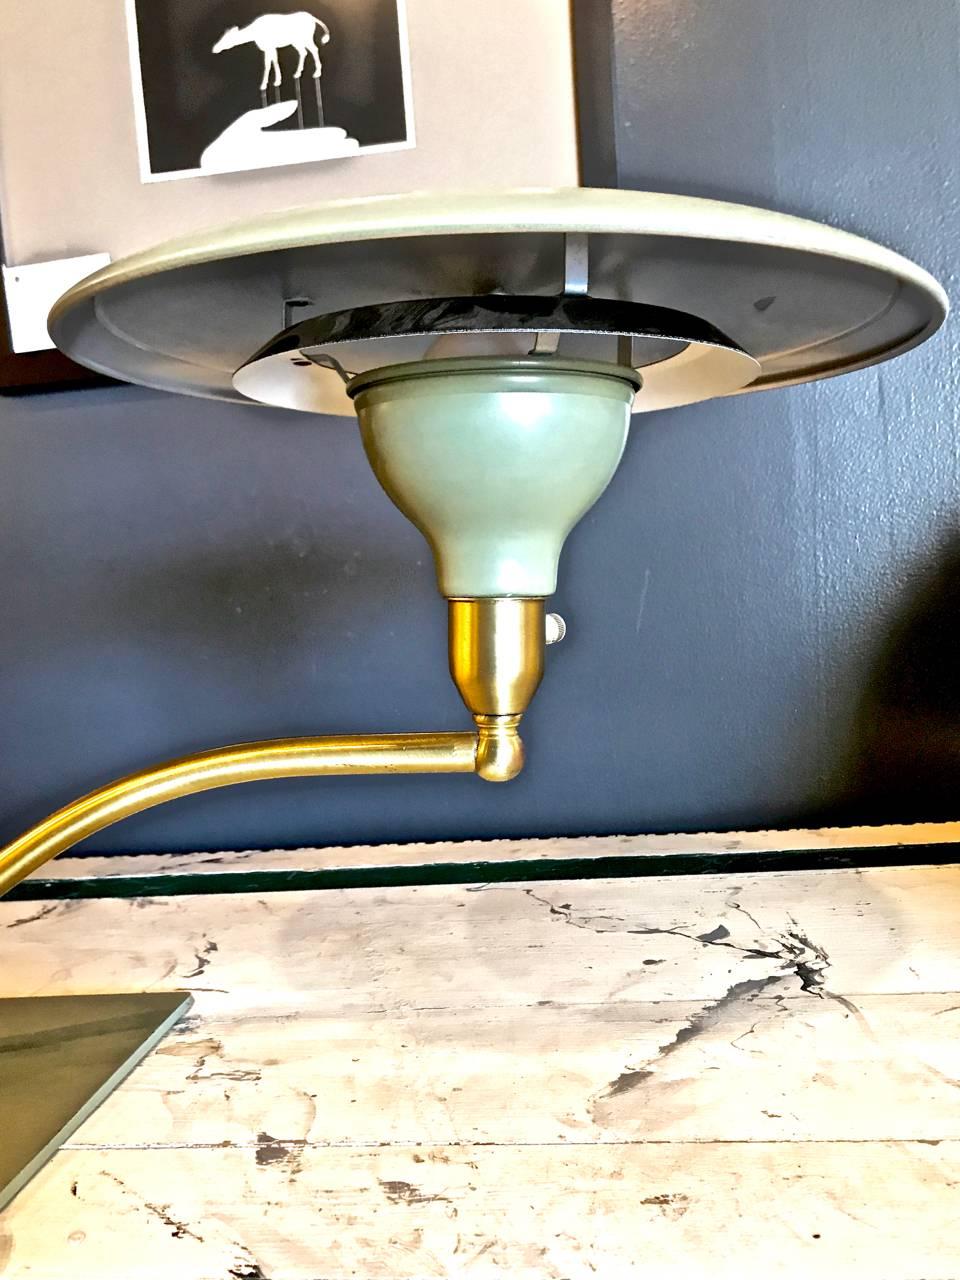 dazor flying saucer lamp